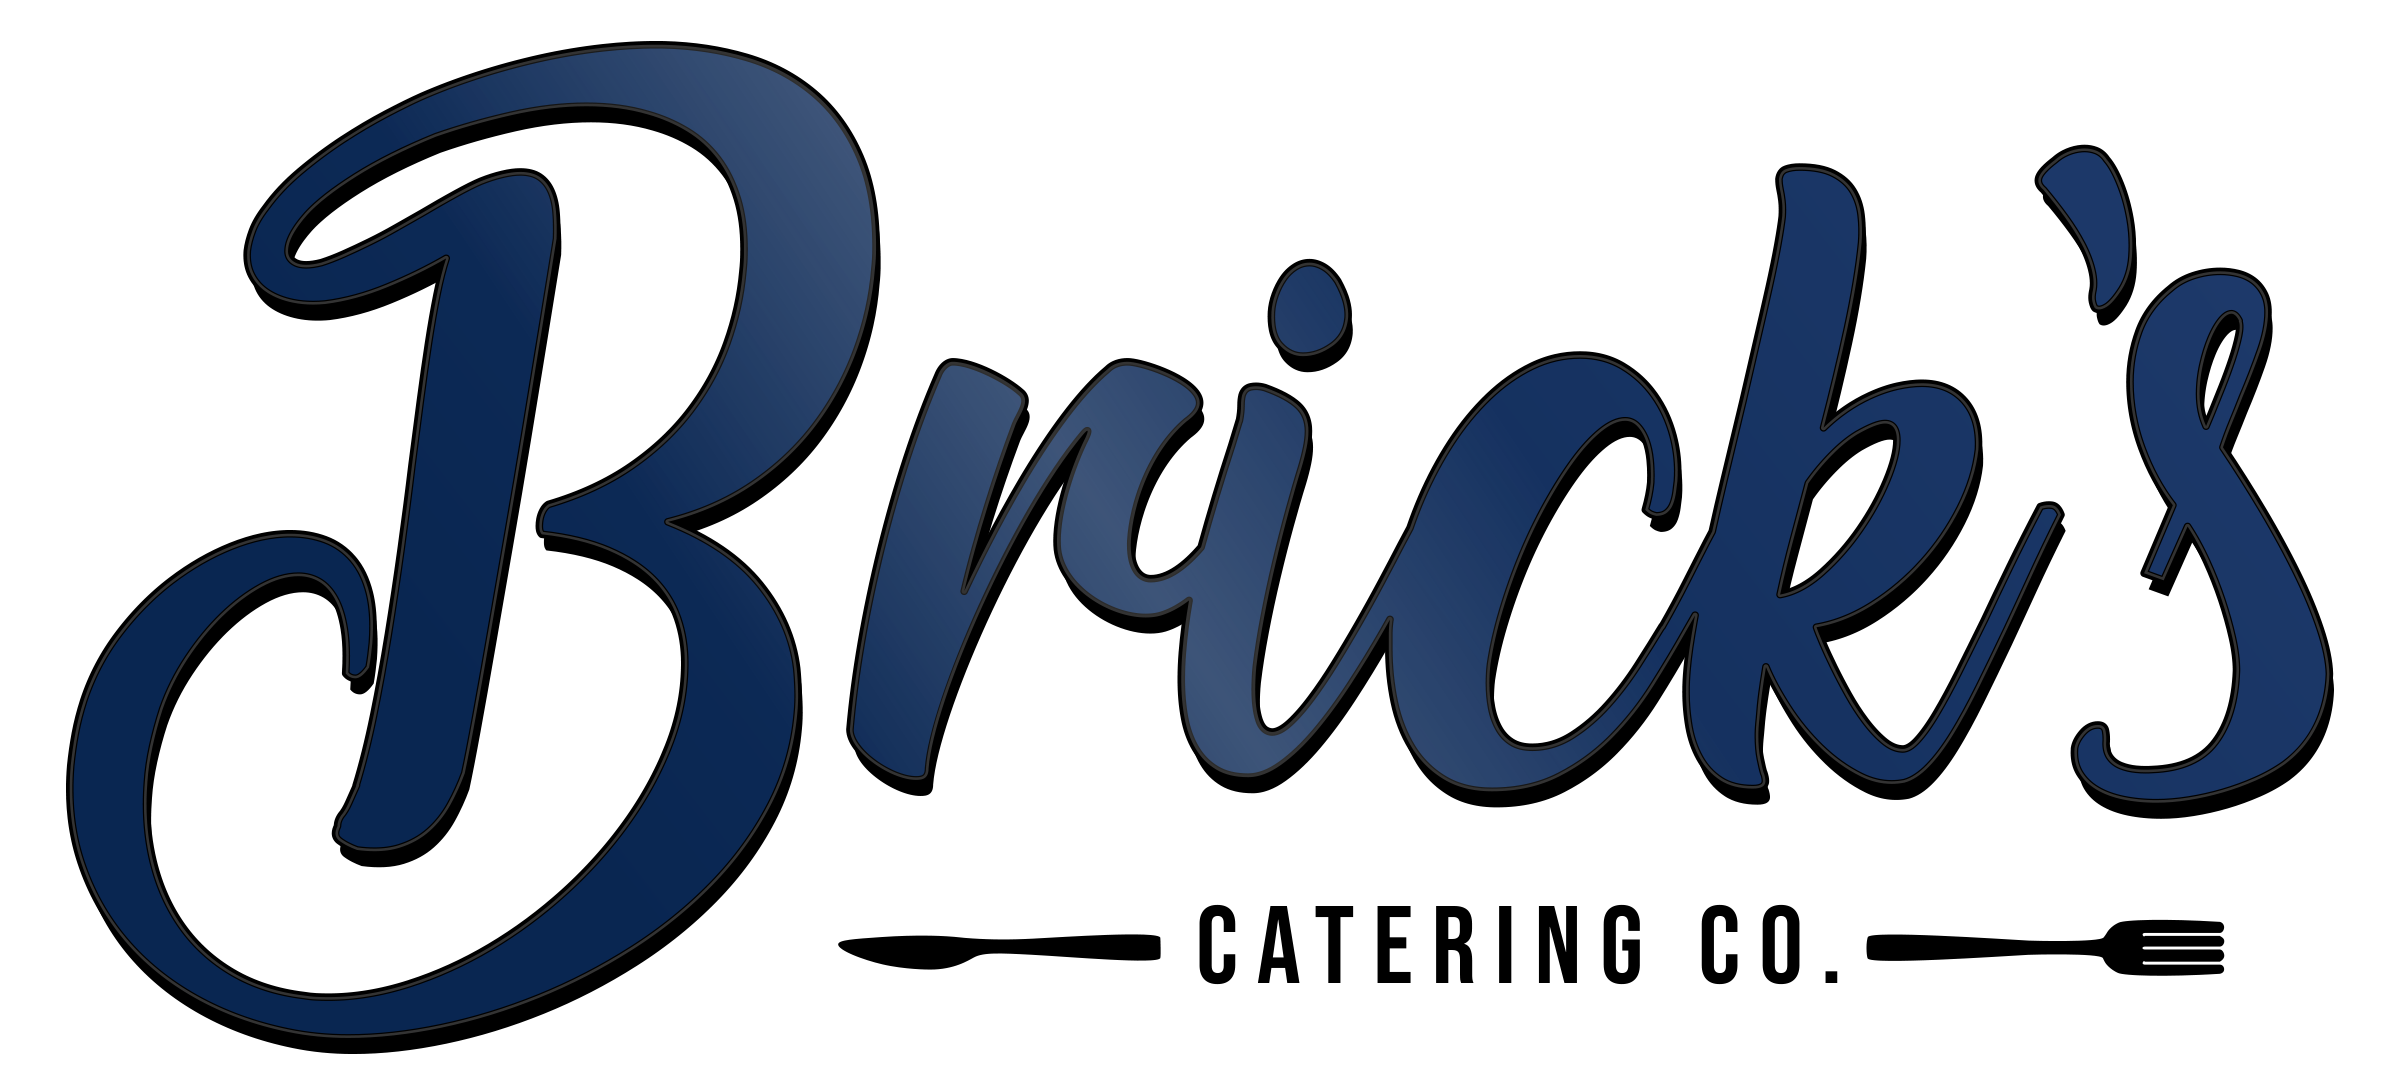 Brick's $100 Digital Gift Card